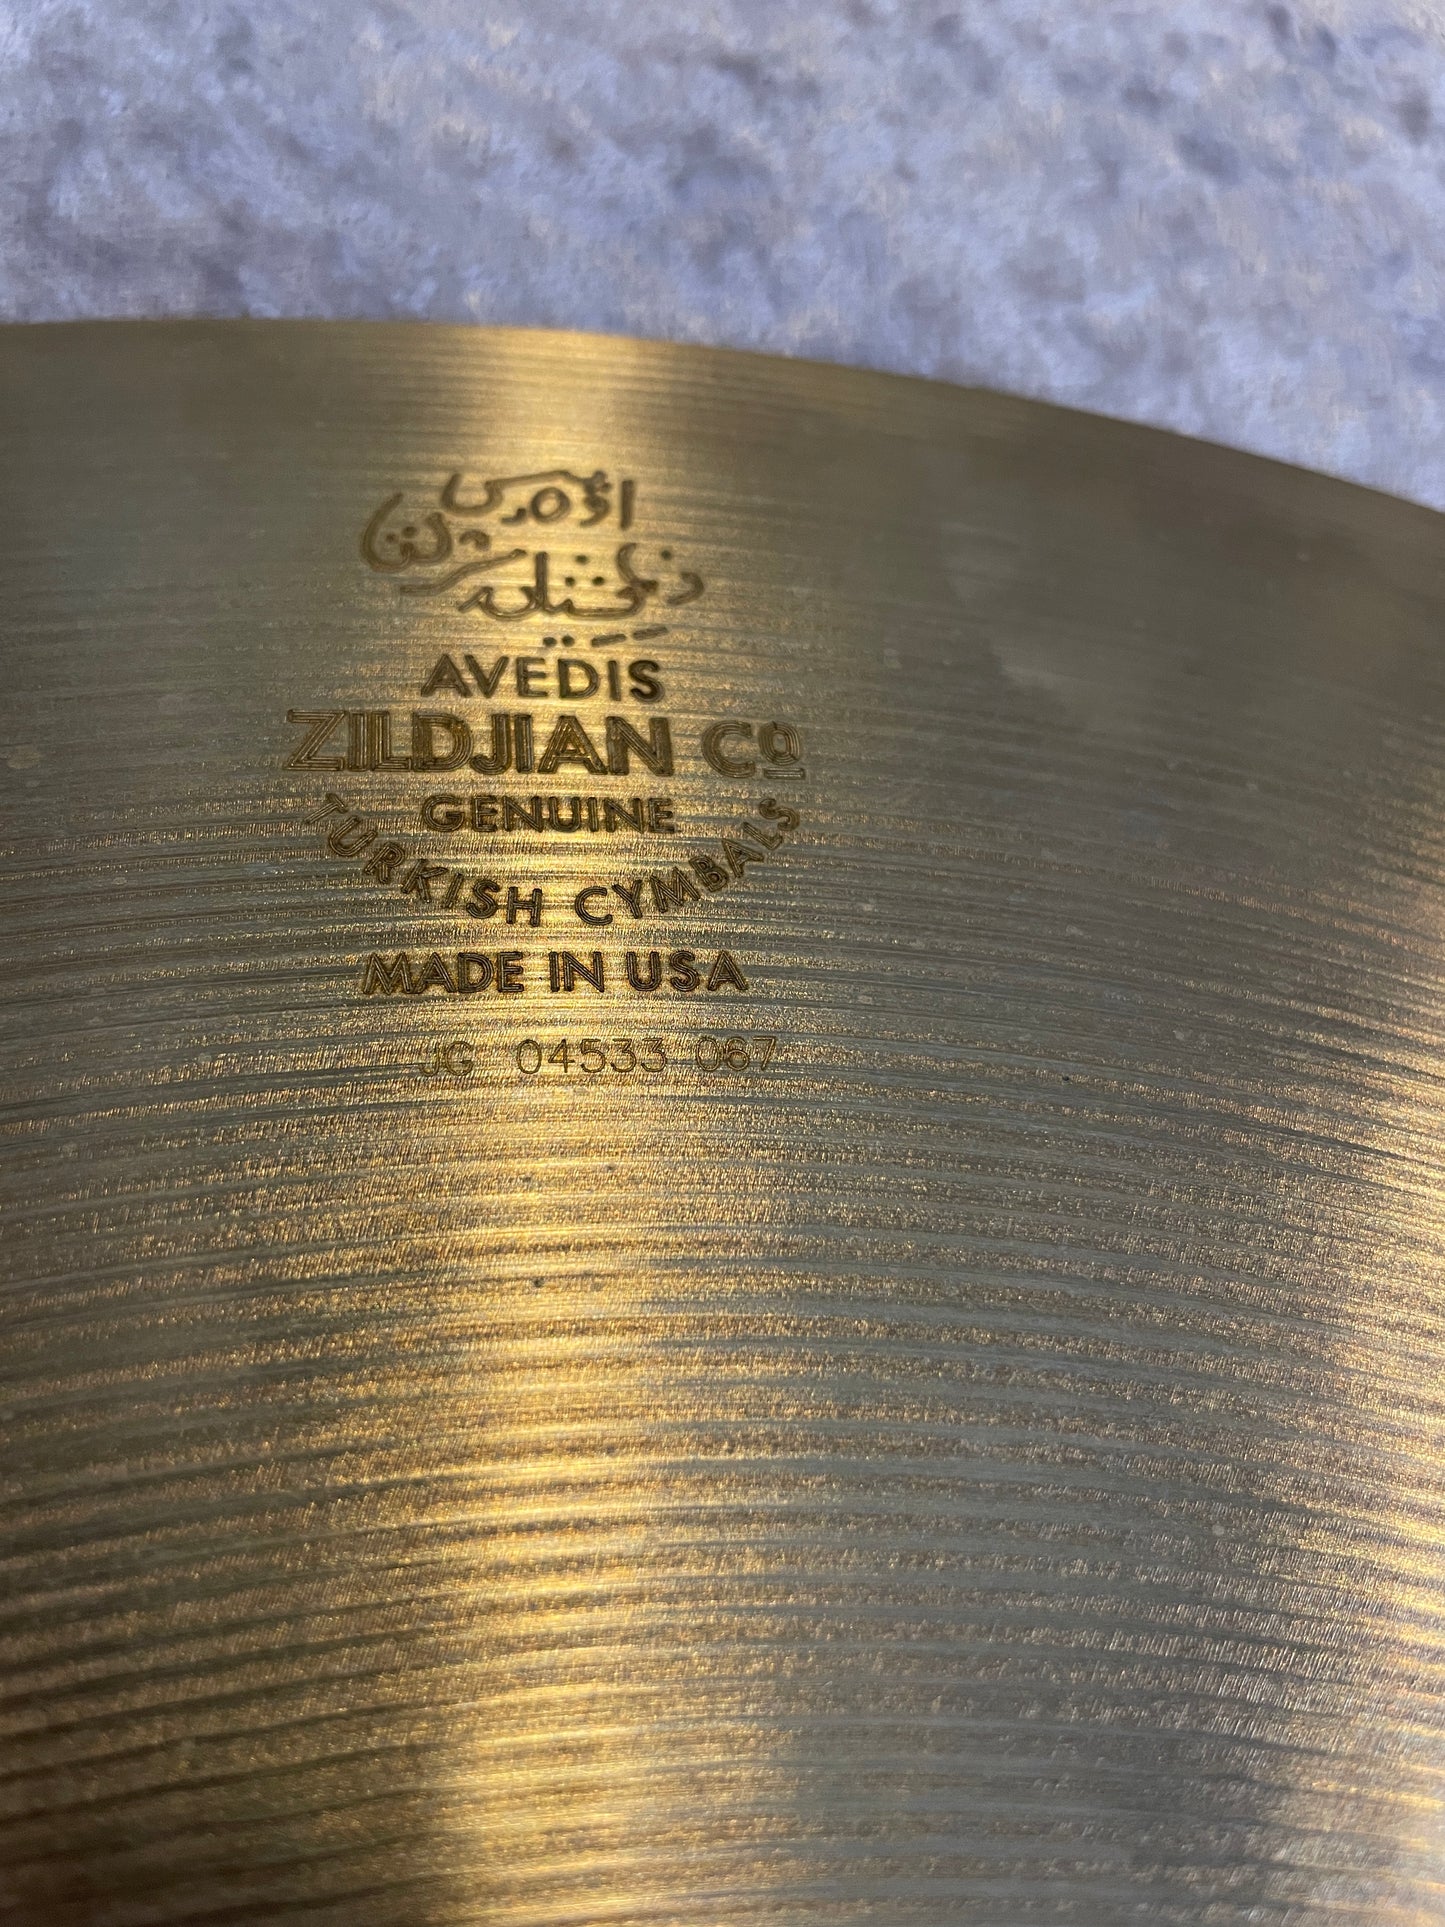 20" Zildjian A A8014 Armand Ride Cymbal 2202g